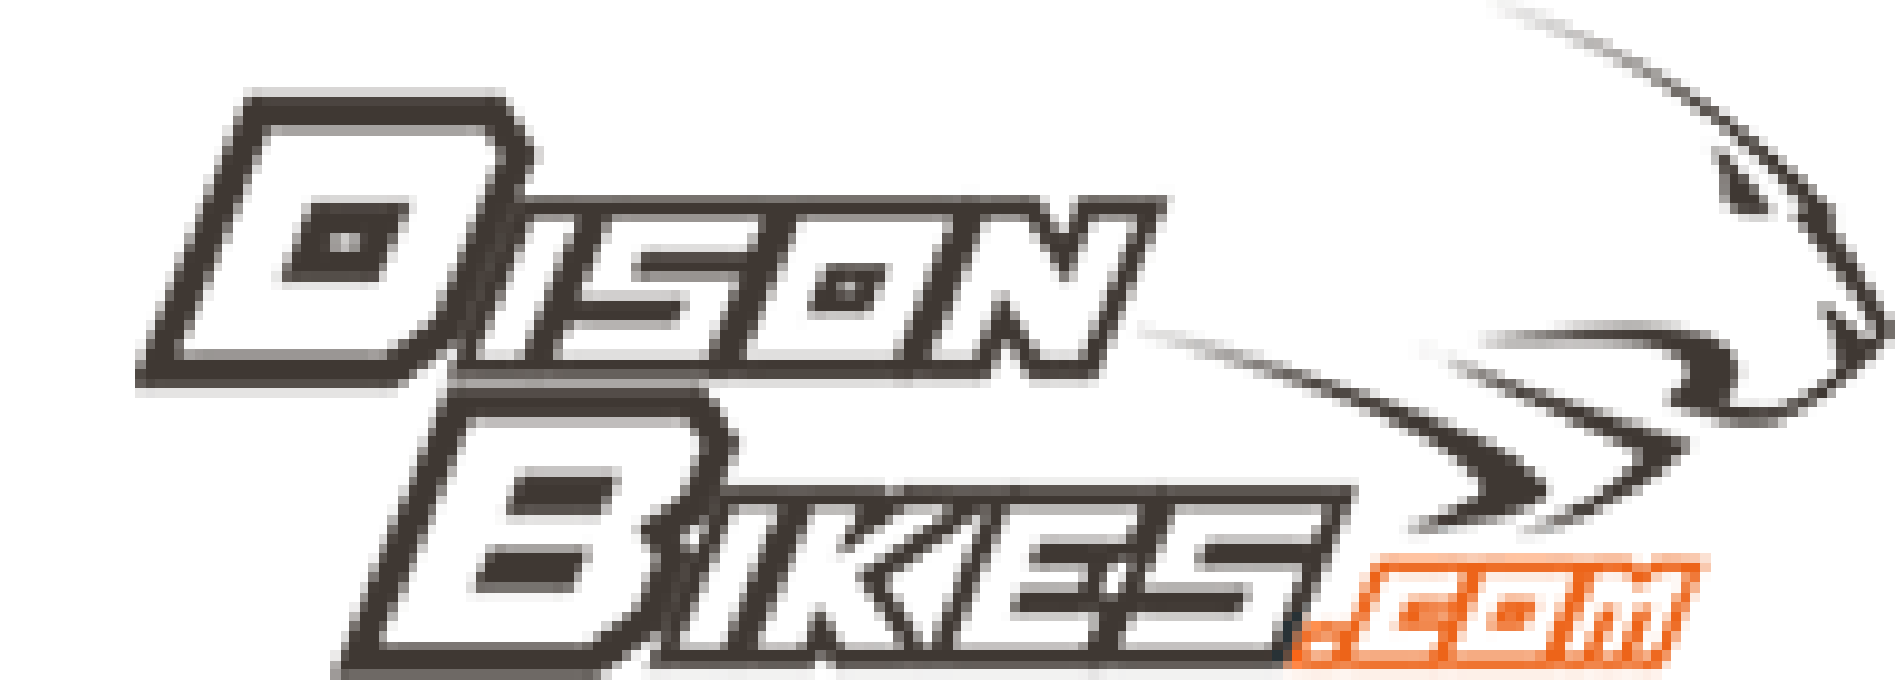 Dison Bikes Store